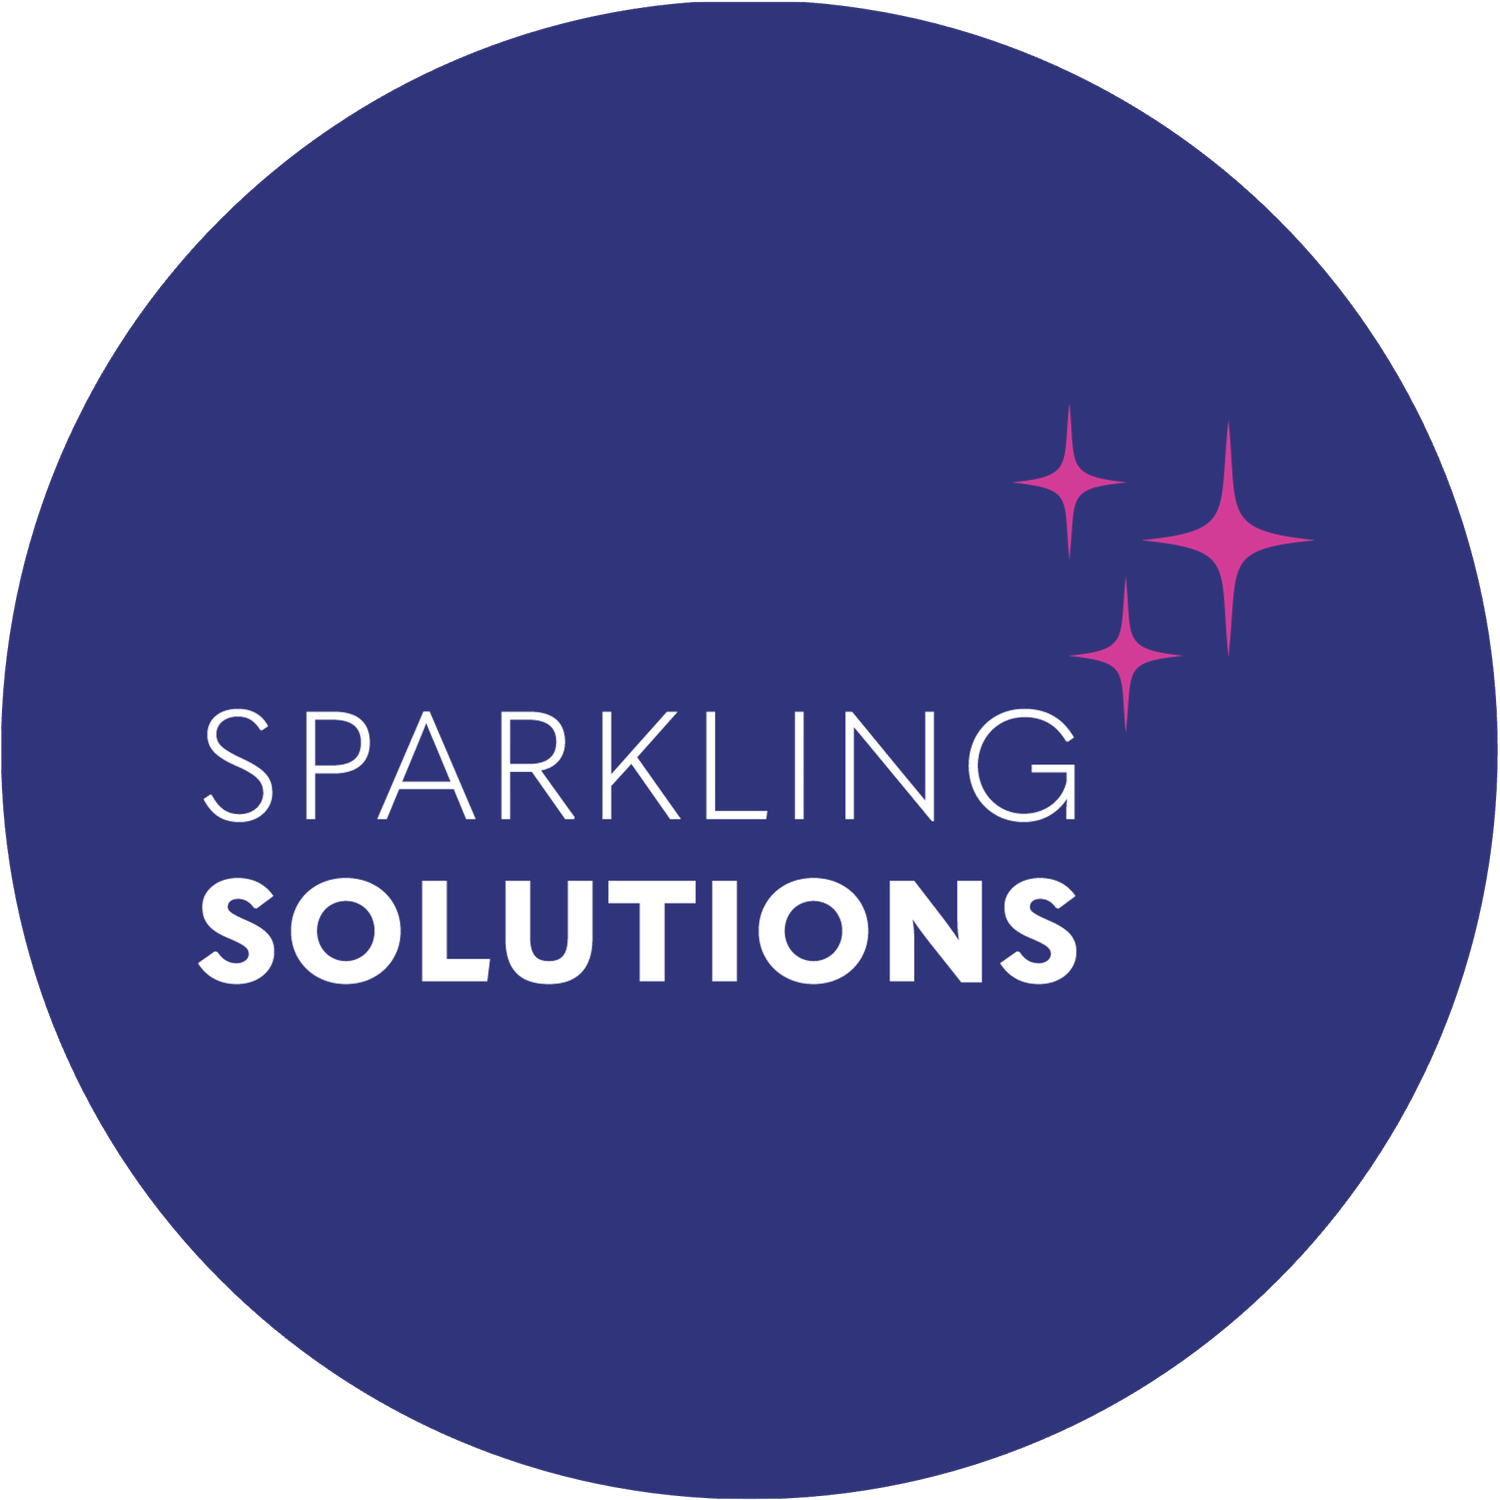 Sparkling Solutions